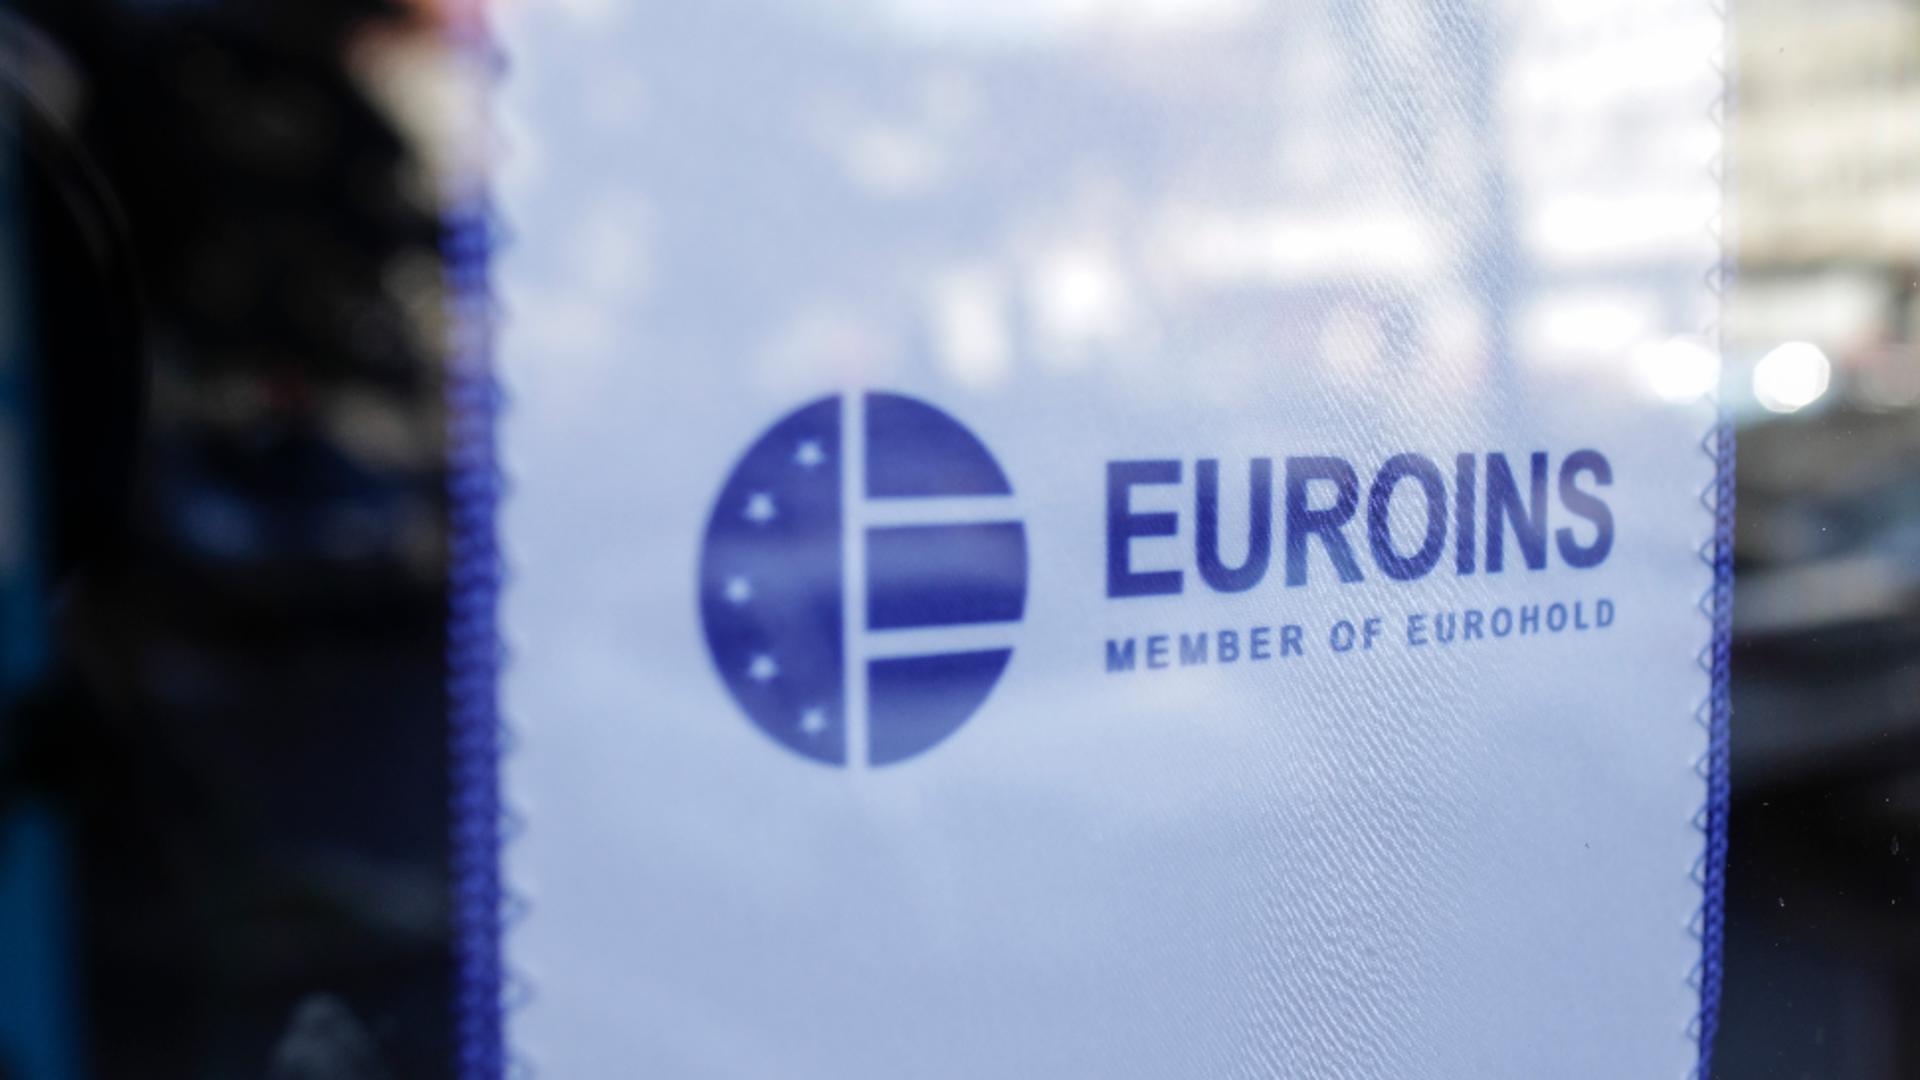 Instanța a respins cererea de suspendare a deciziei de retragere a autorizației de funcționare a Euroins